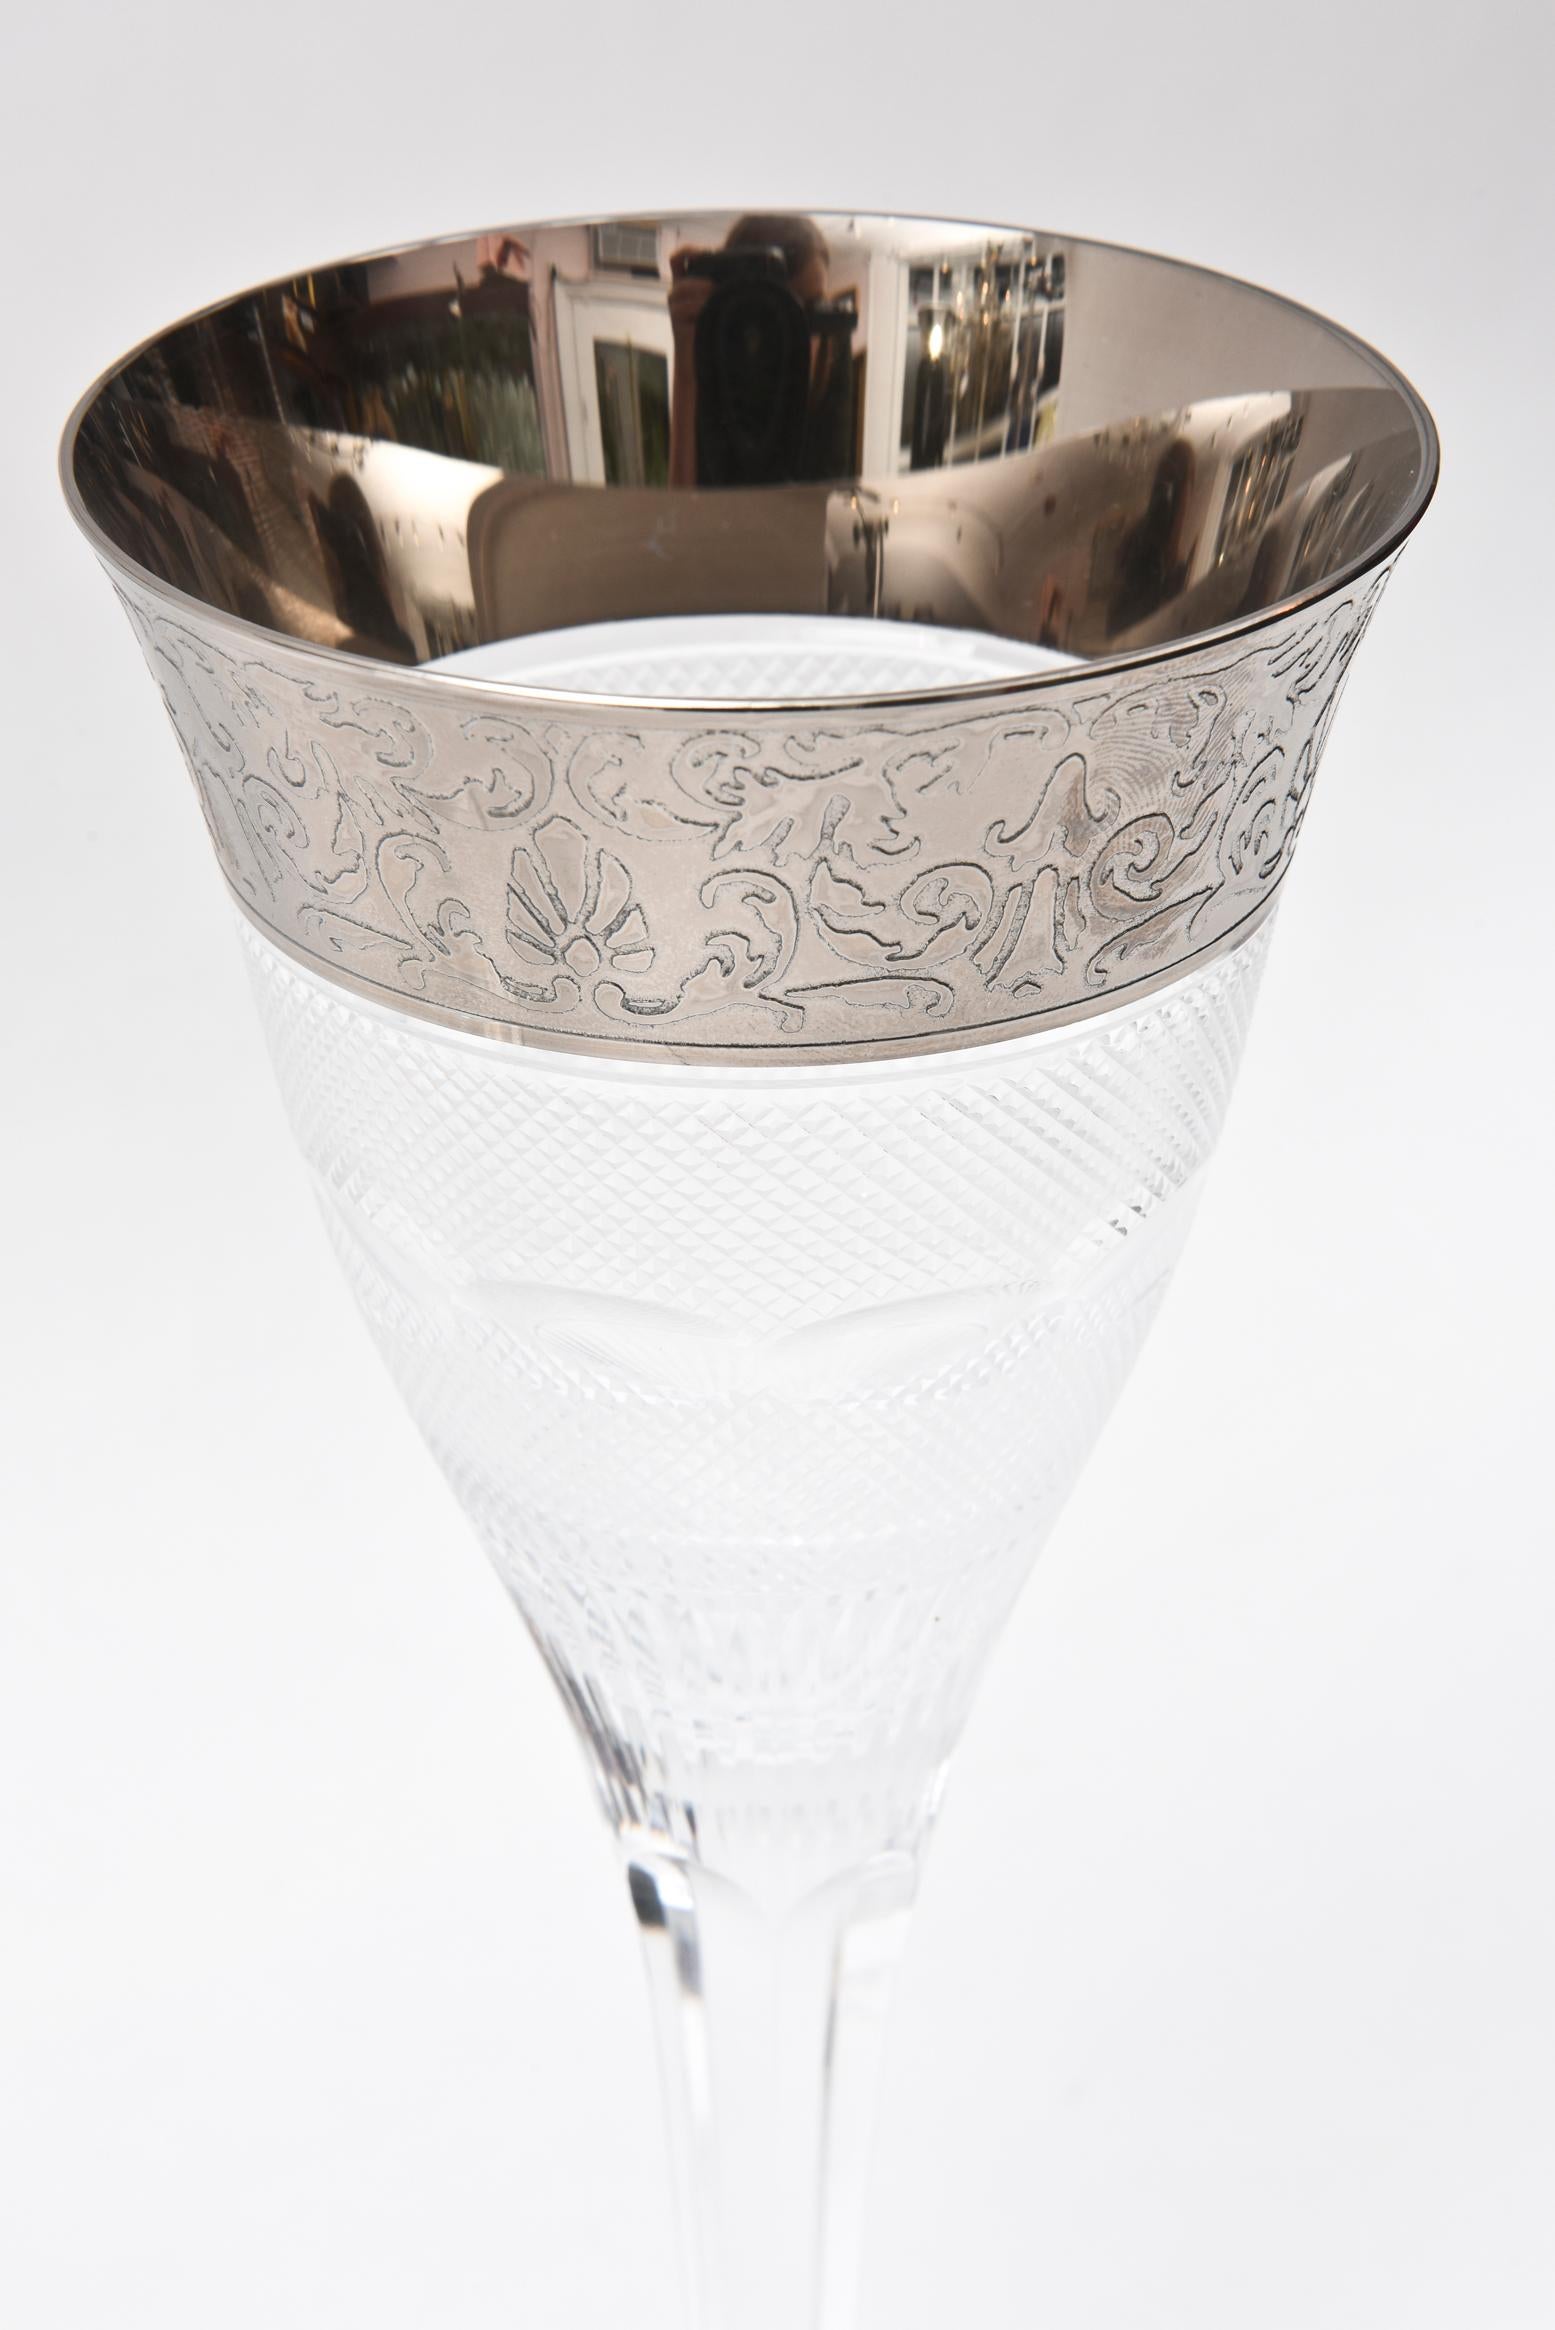 Moser Platinum Trimmed Cut Crystal Goblets, Tall Set of 6 4